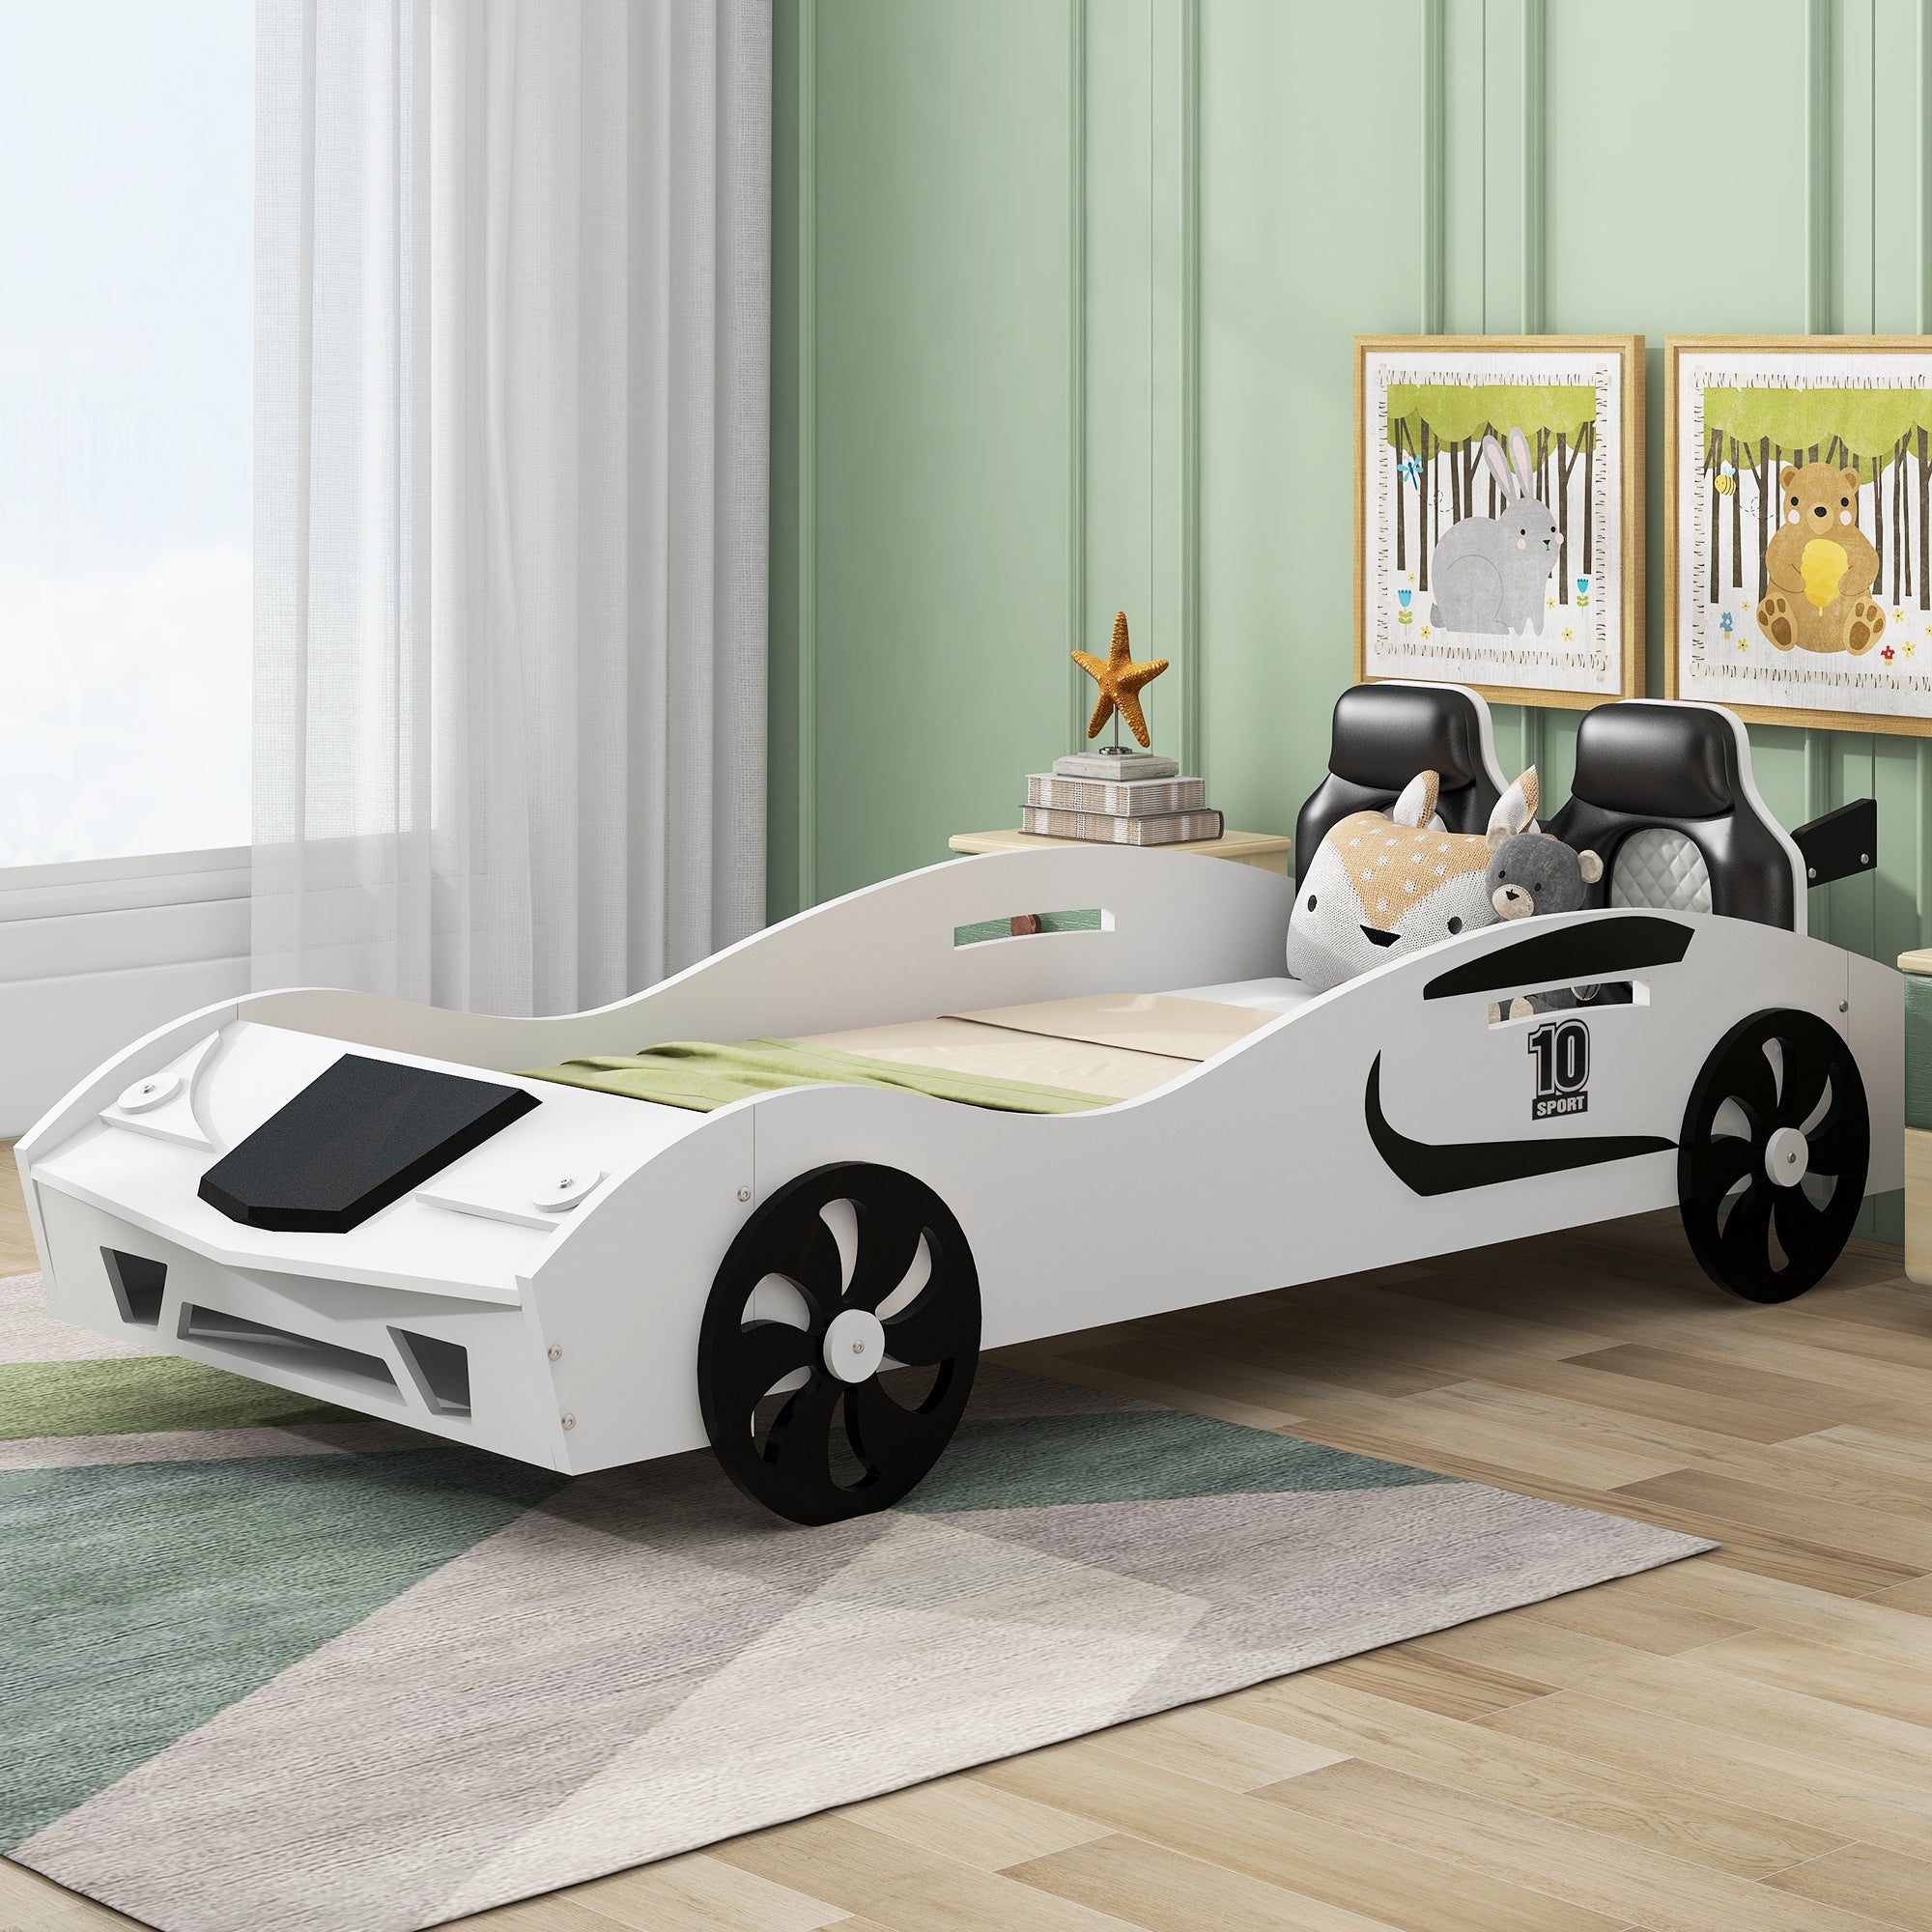 Bellemave Twin Size Race Car-Shaped Platform Bed with Upholstered Backrest and Storage